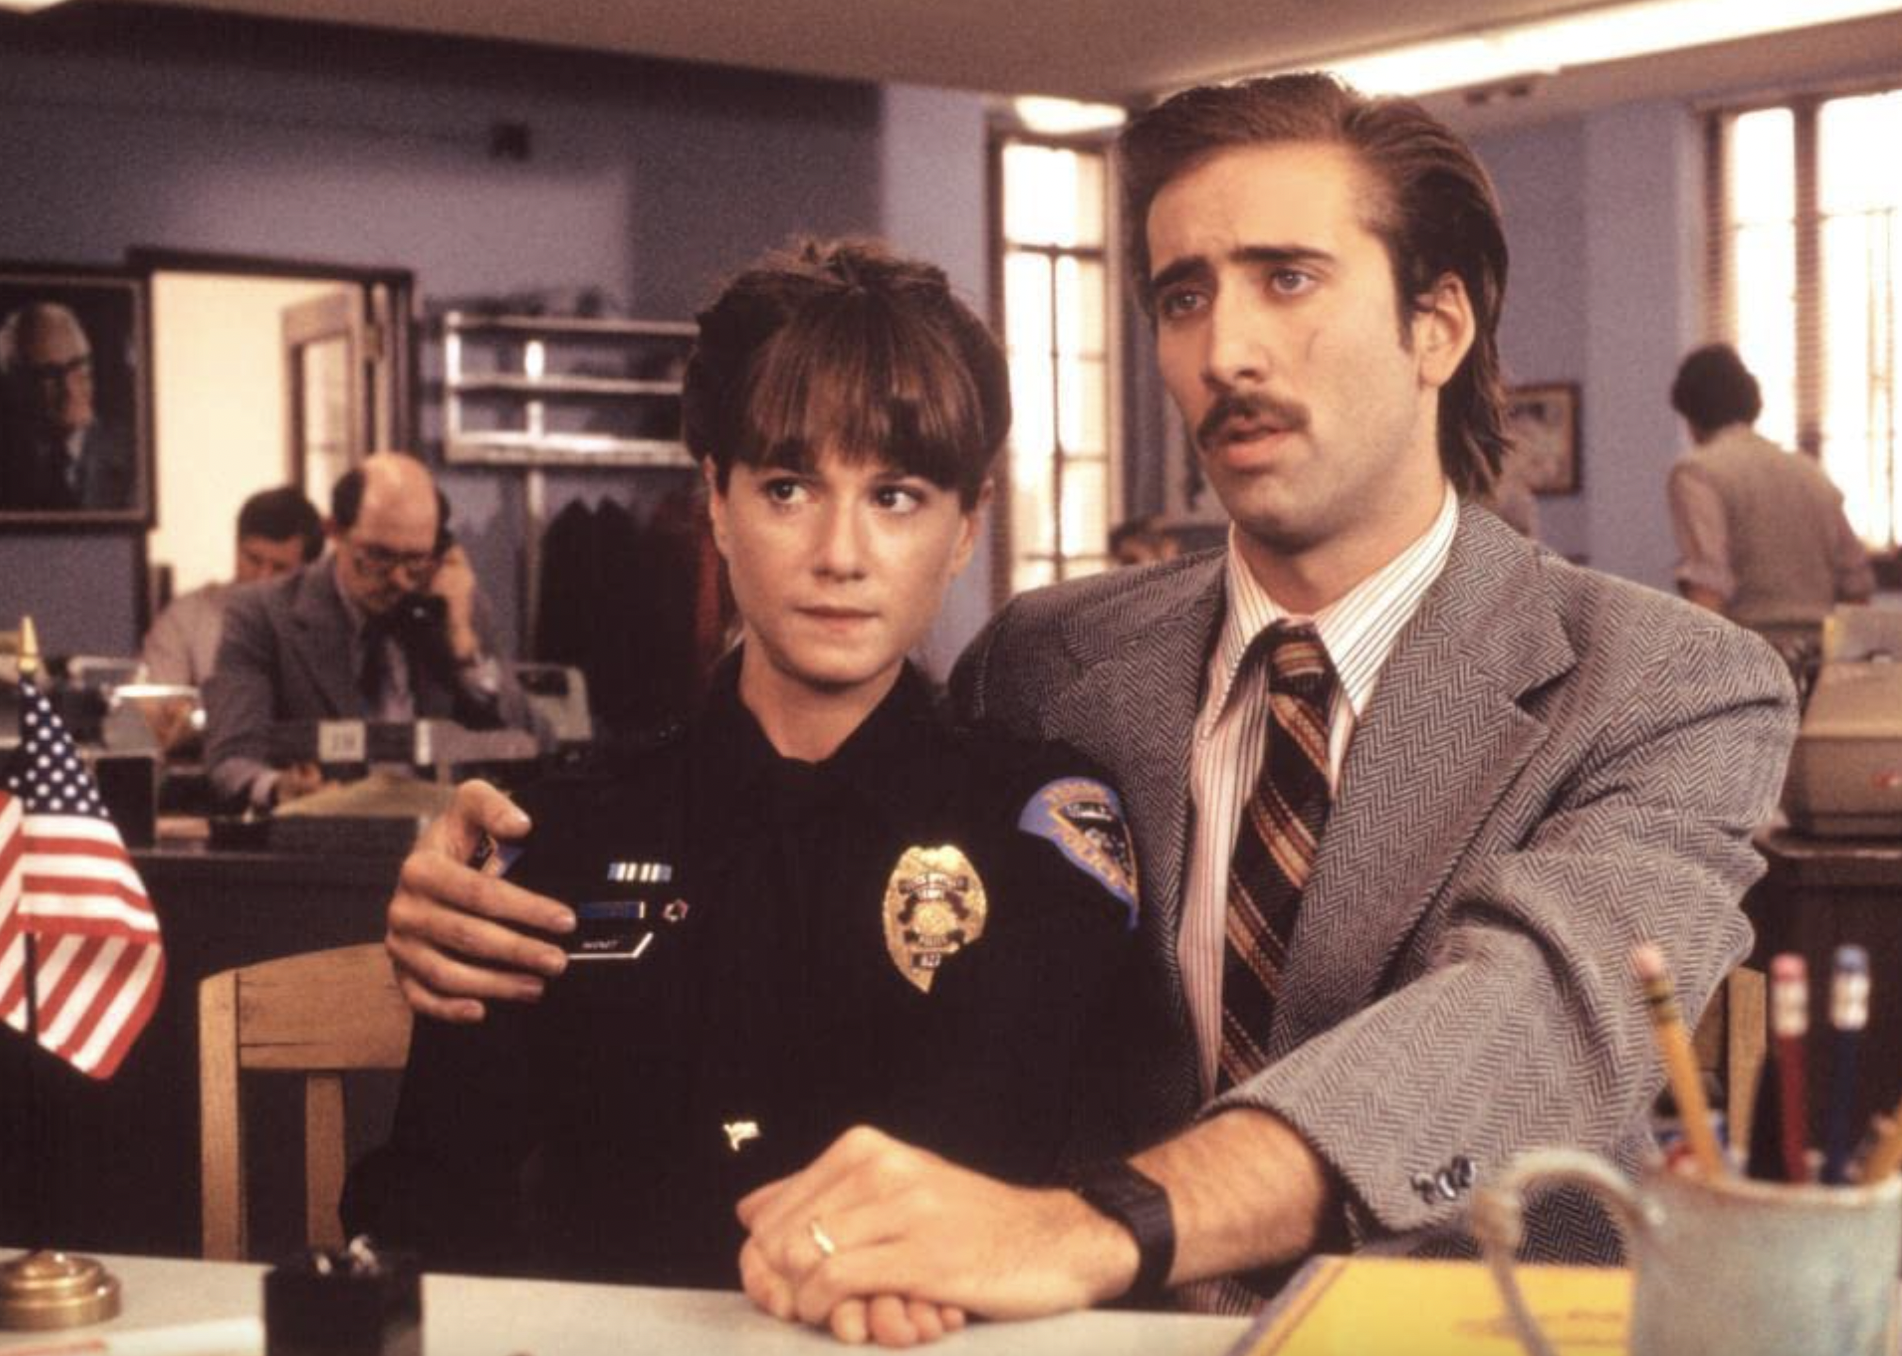 Nicolas Cage and Holly Hunter in "Raising Arizona".